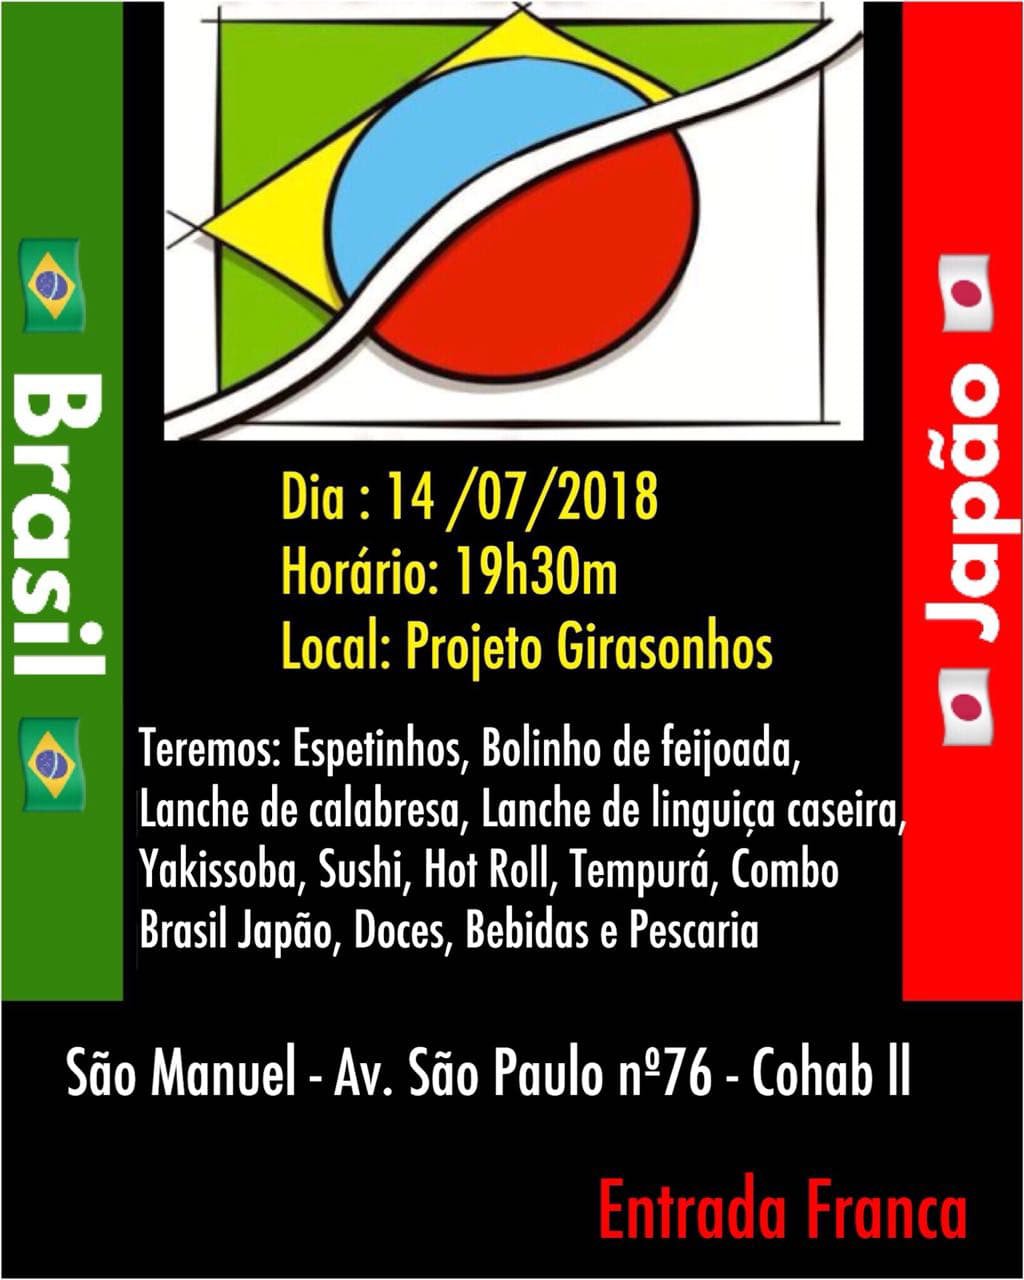 Projeto Girasonhos realiza Festa Brasil Japão dia 14